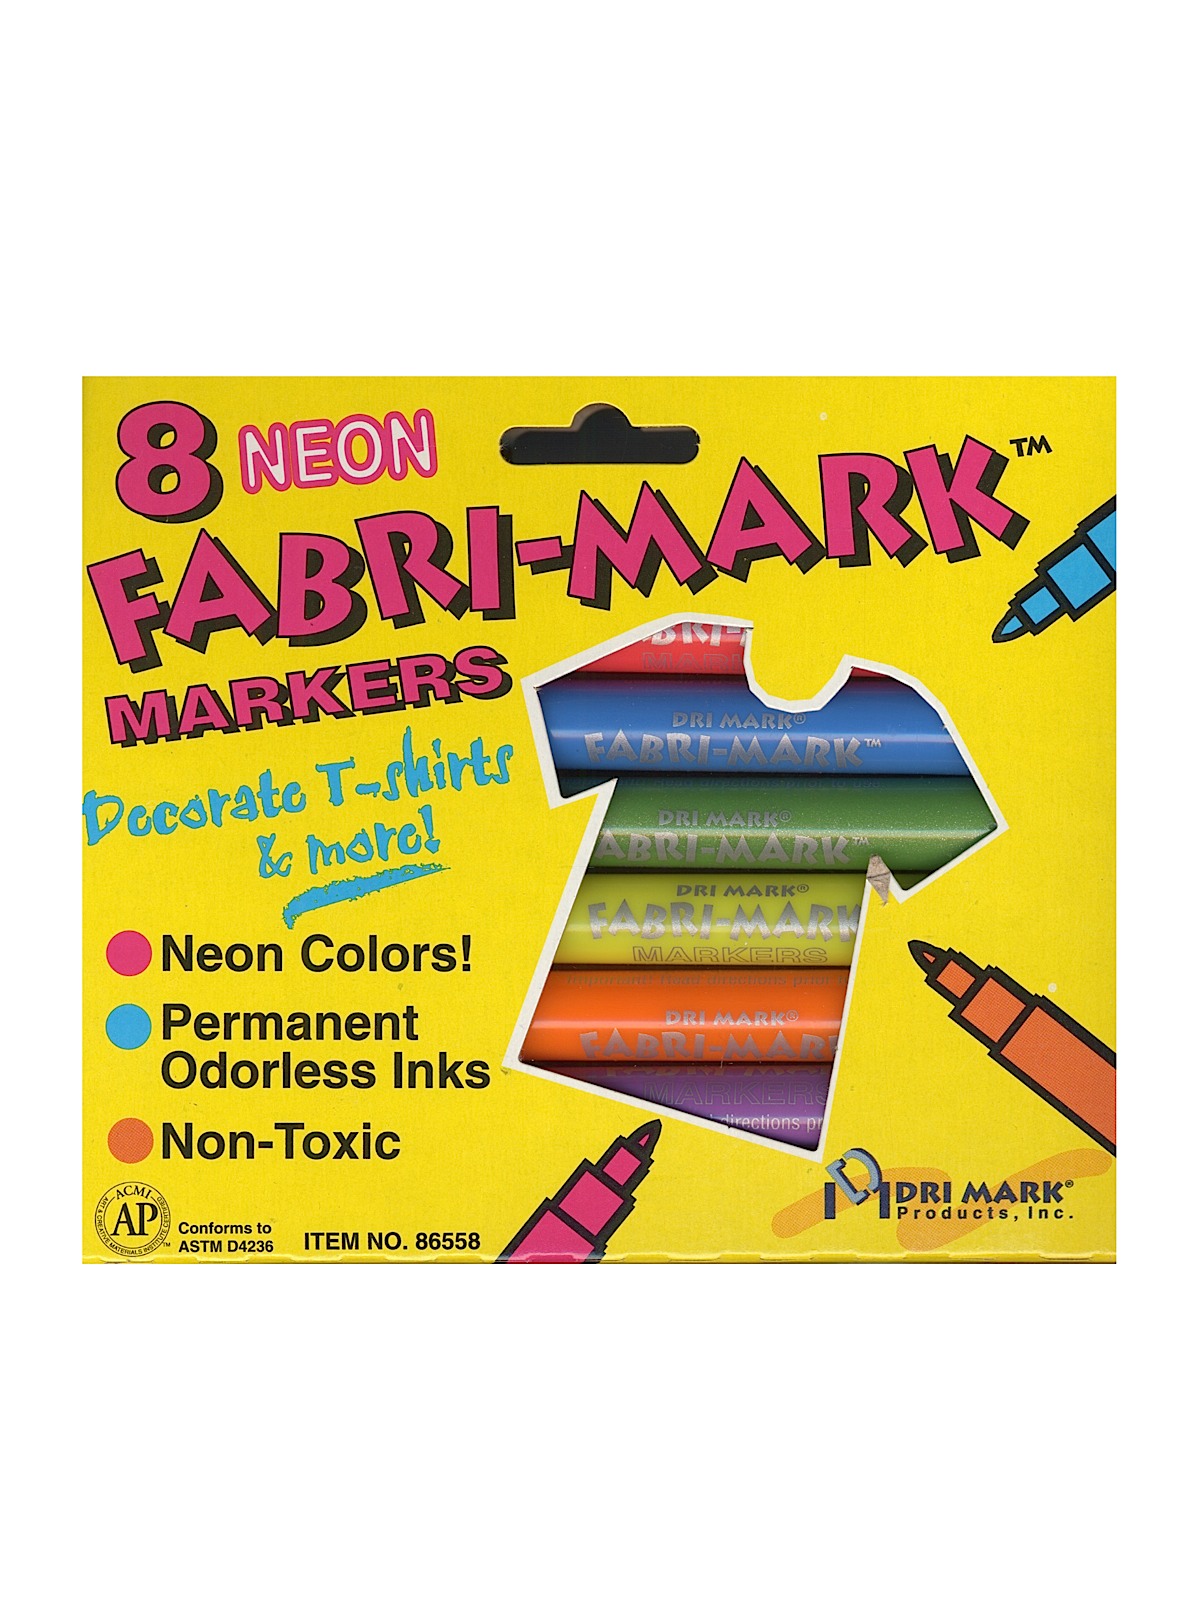 Fabri-mark Markers Neon Assortment